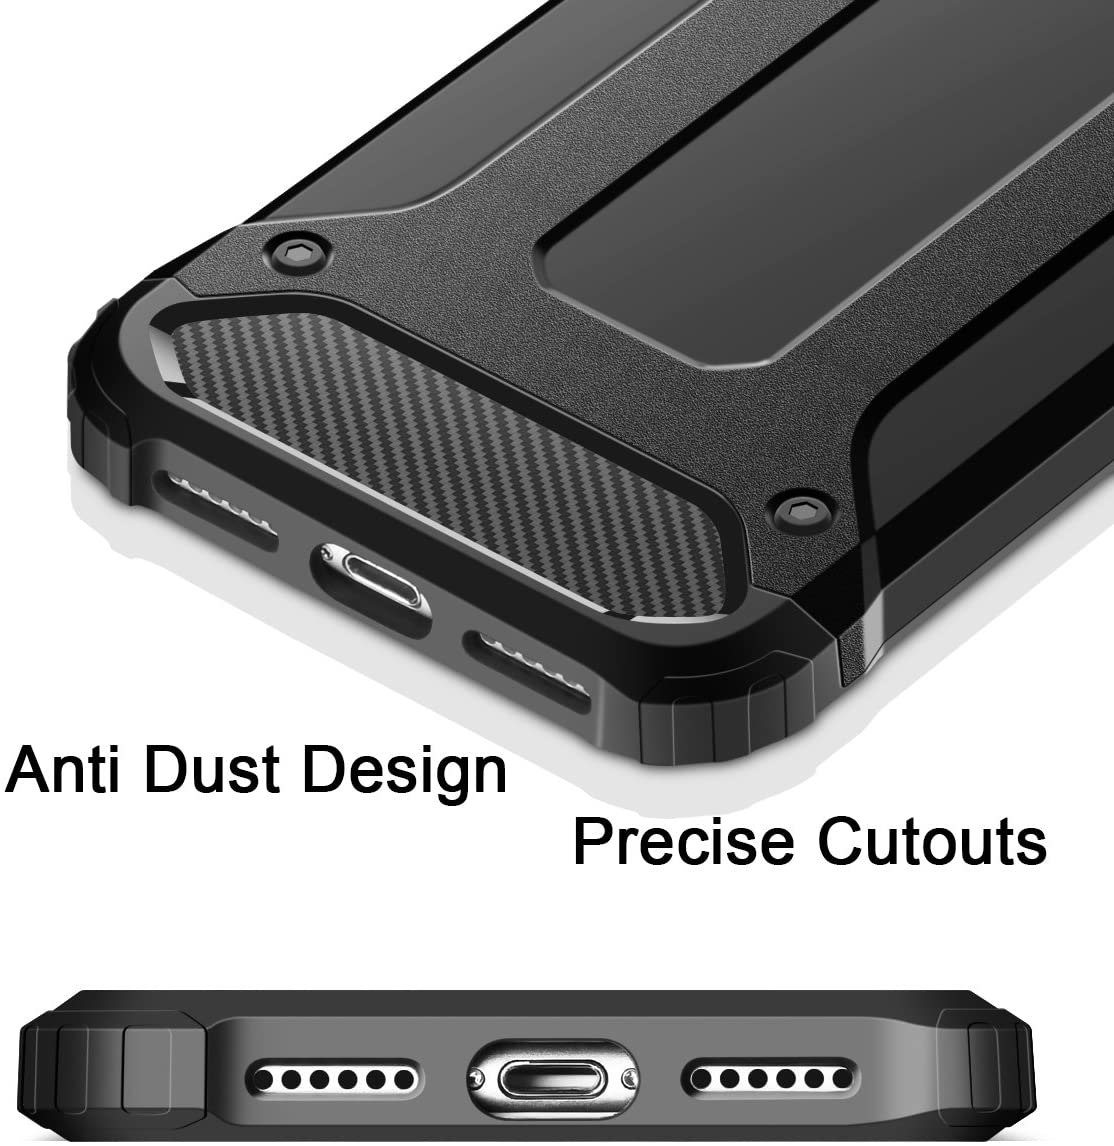 Apple iPhone 7 Case, Rugged Tough Dual Layer Armor Case Black